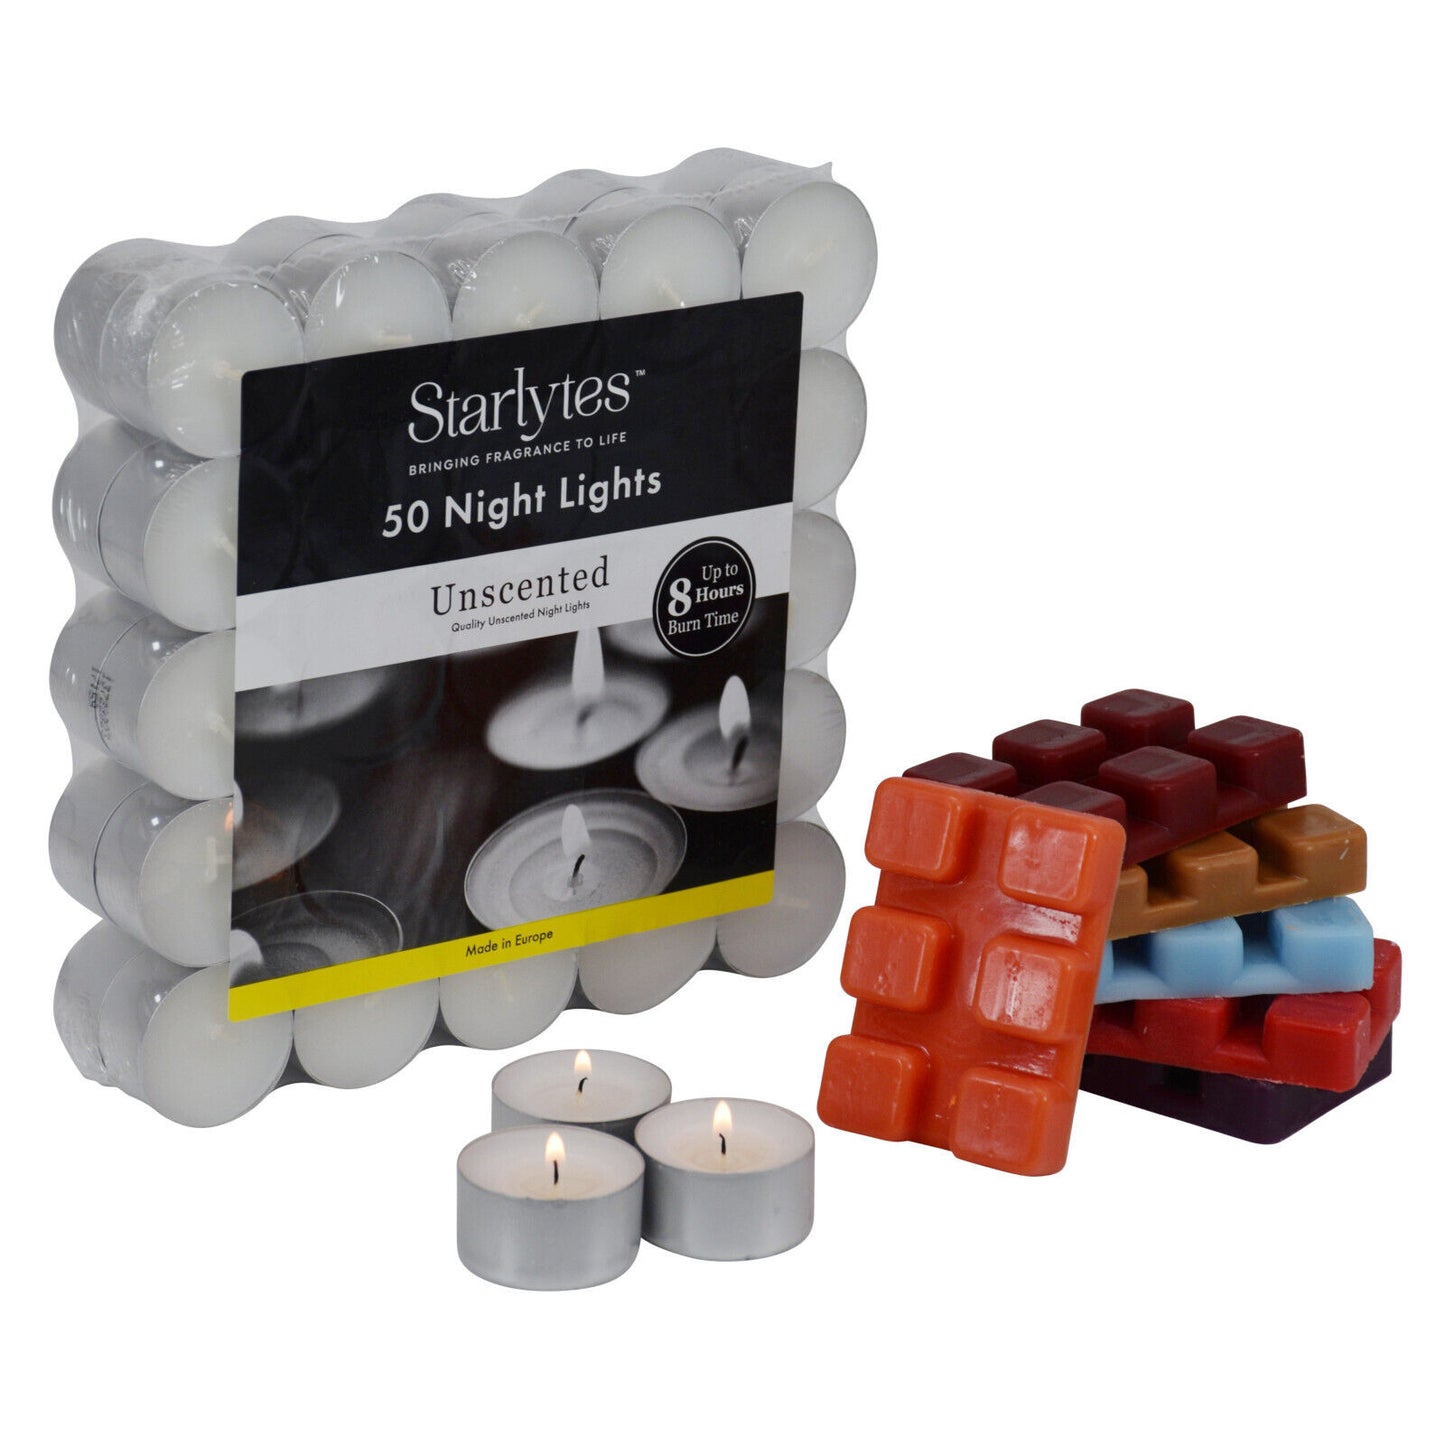 50x 8hr Tealights Night Candles & 36x Luxury Fragranced Wax Melts Cubes 212.4g